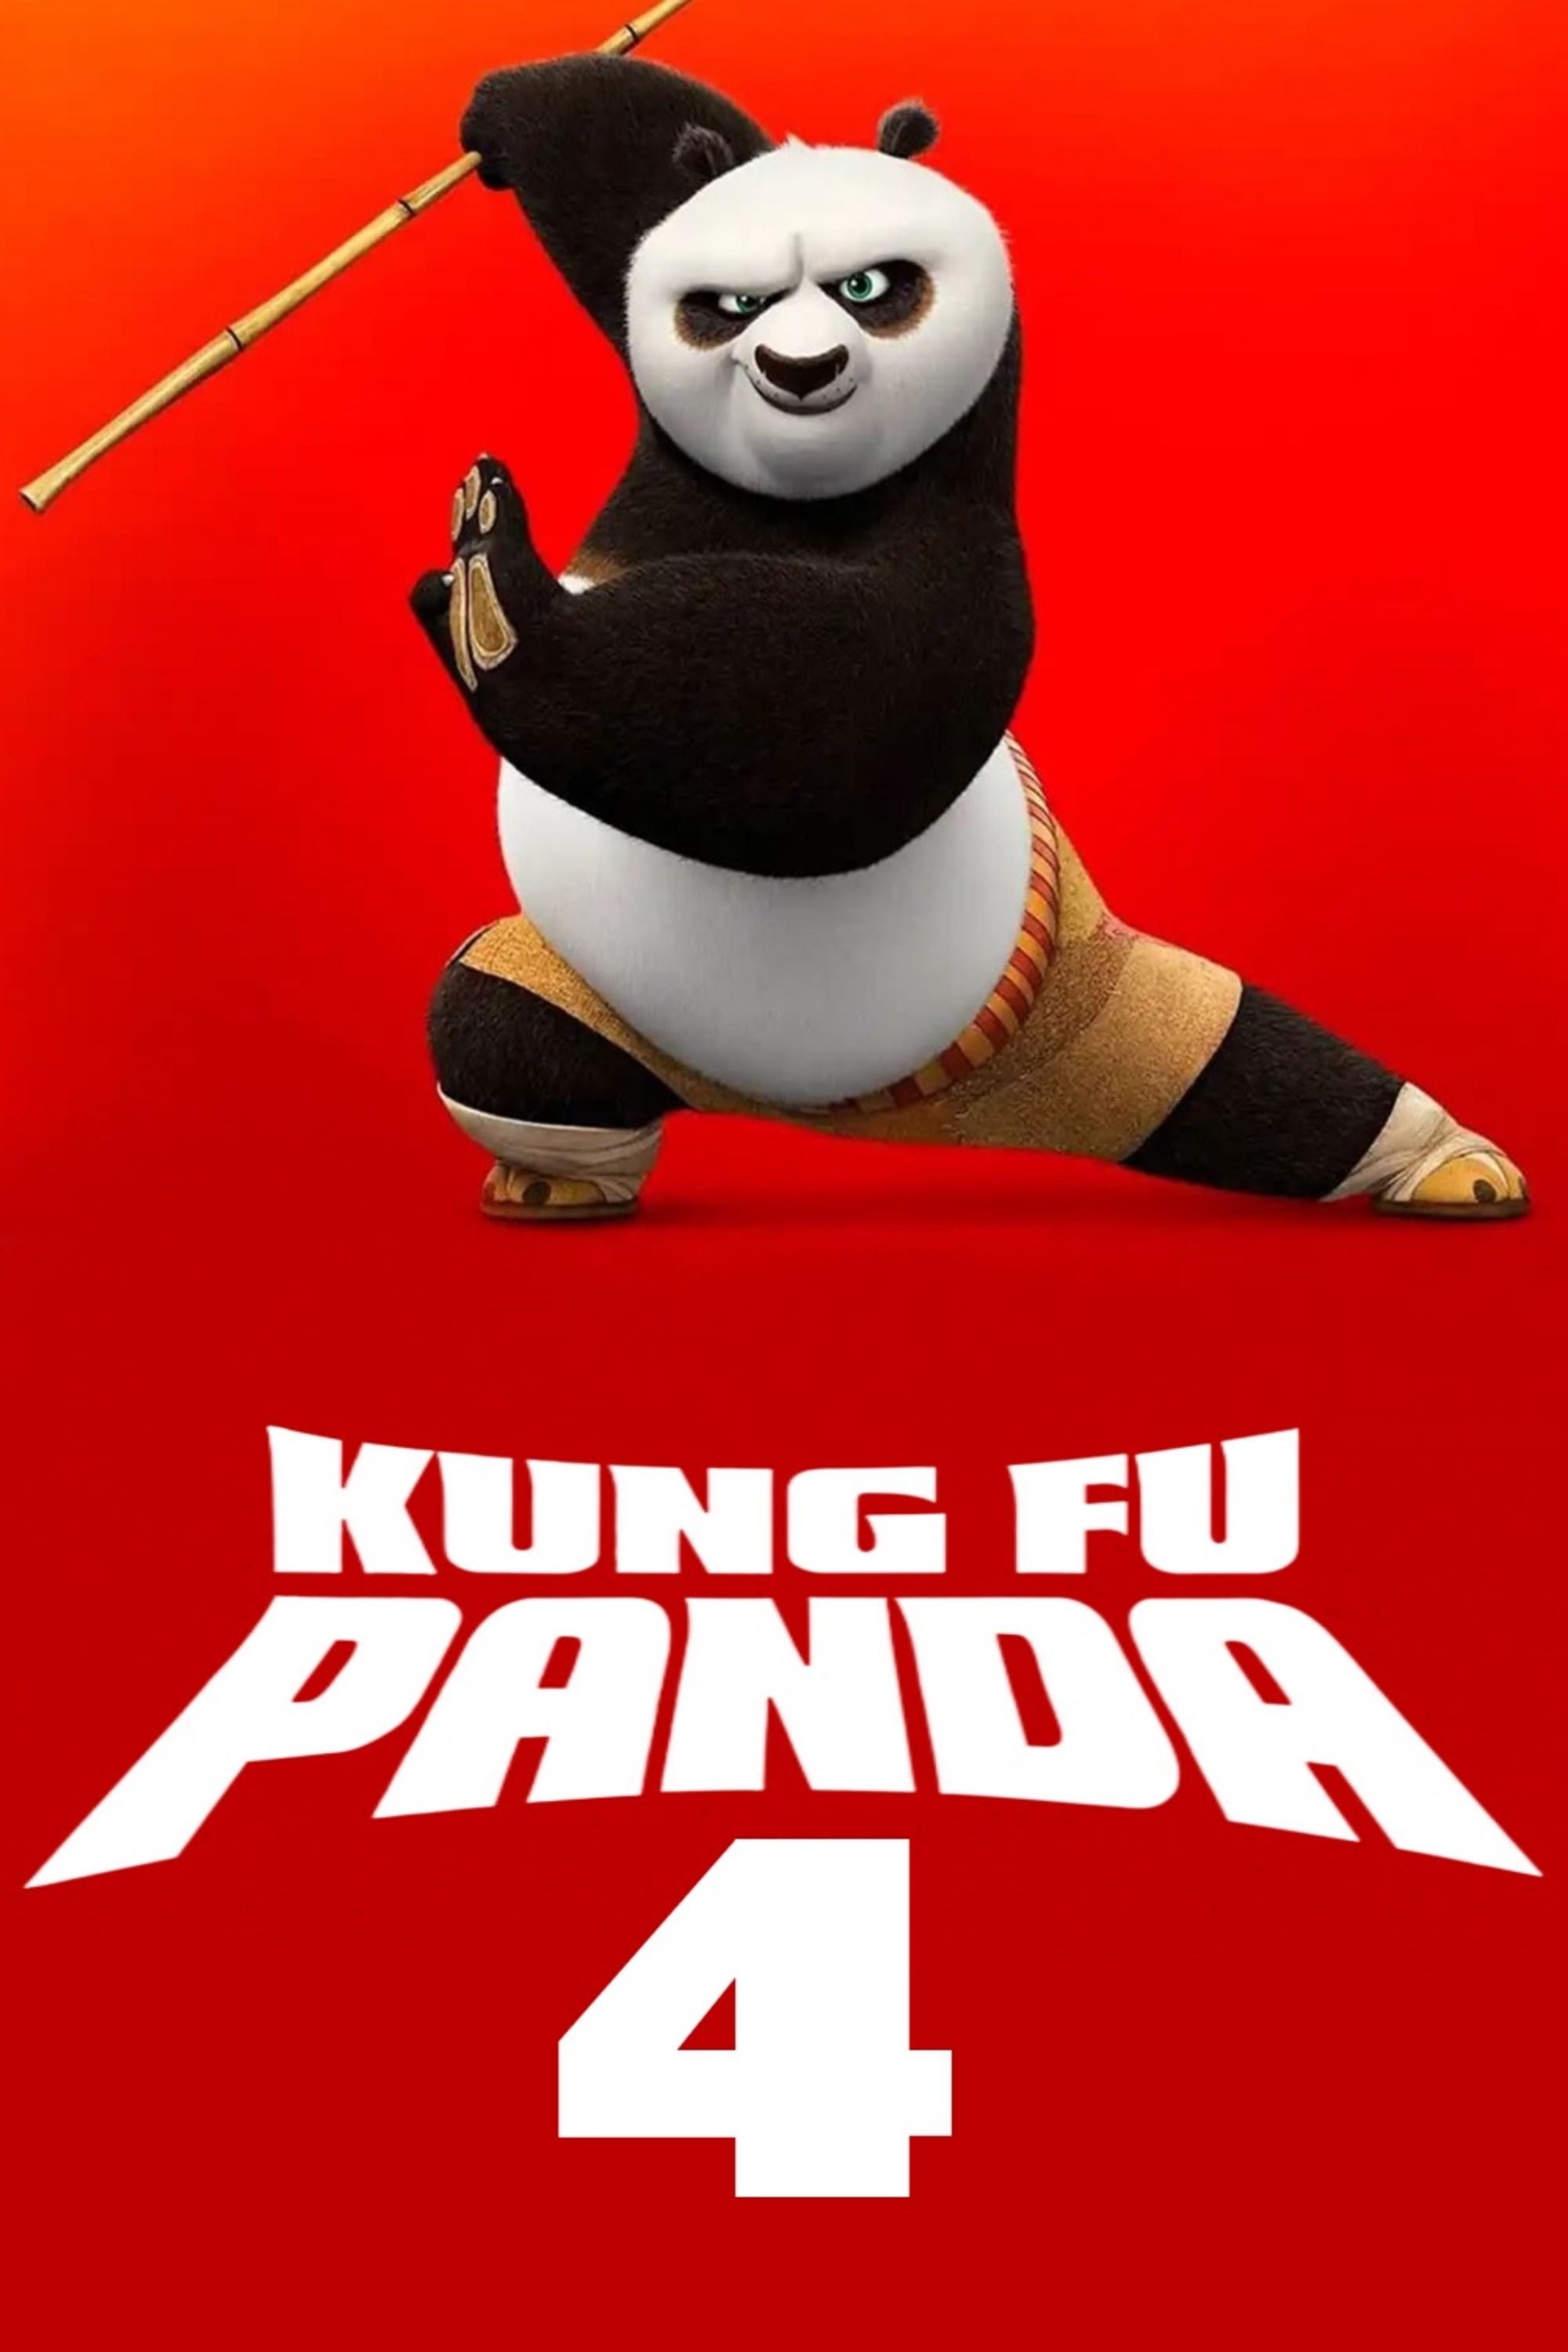 Kung Fu Panda 4 Runtime Revealed, Nearly Breaks Franchise Record